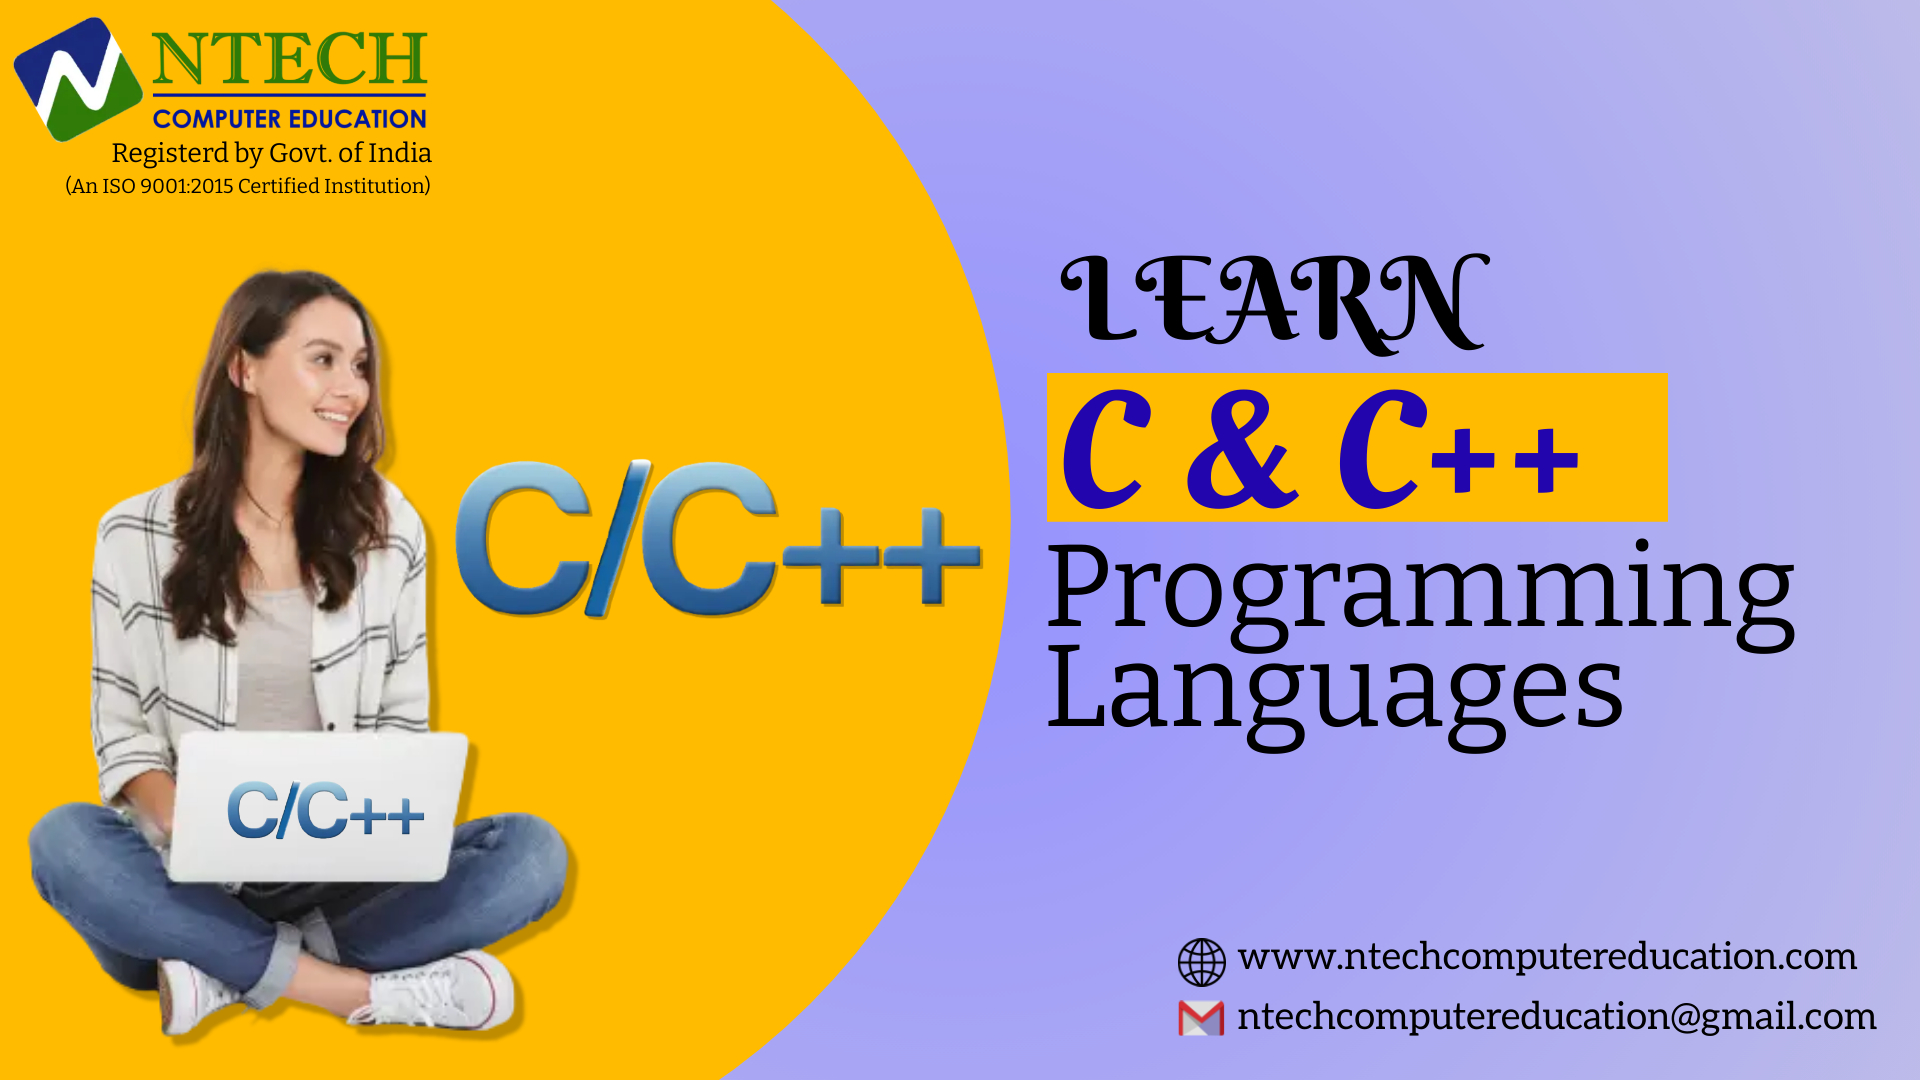 c and c++ programming Languages